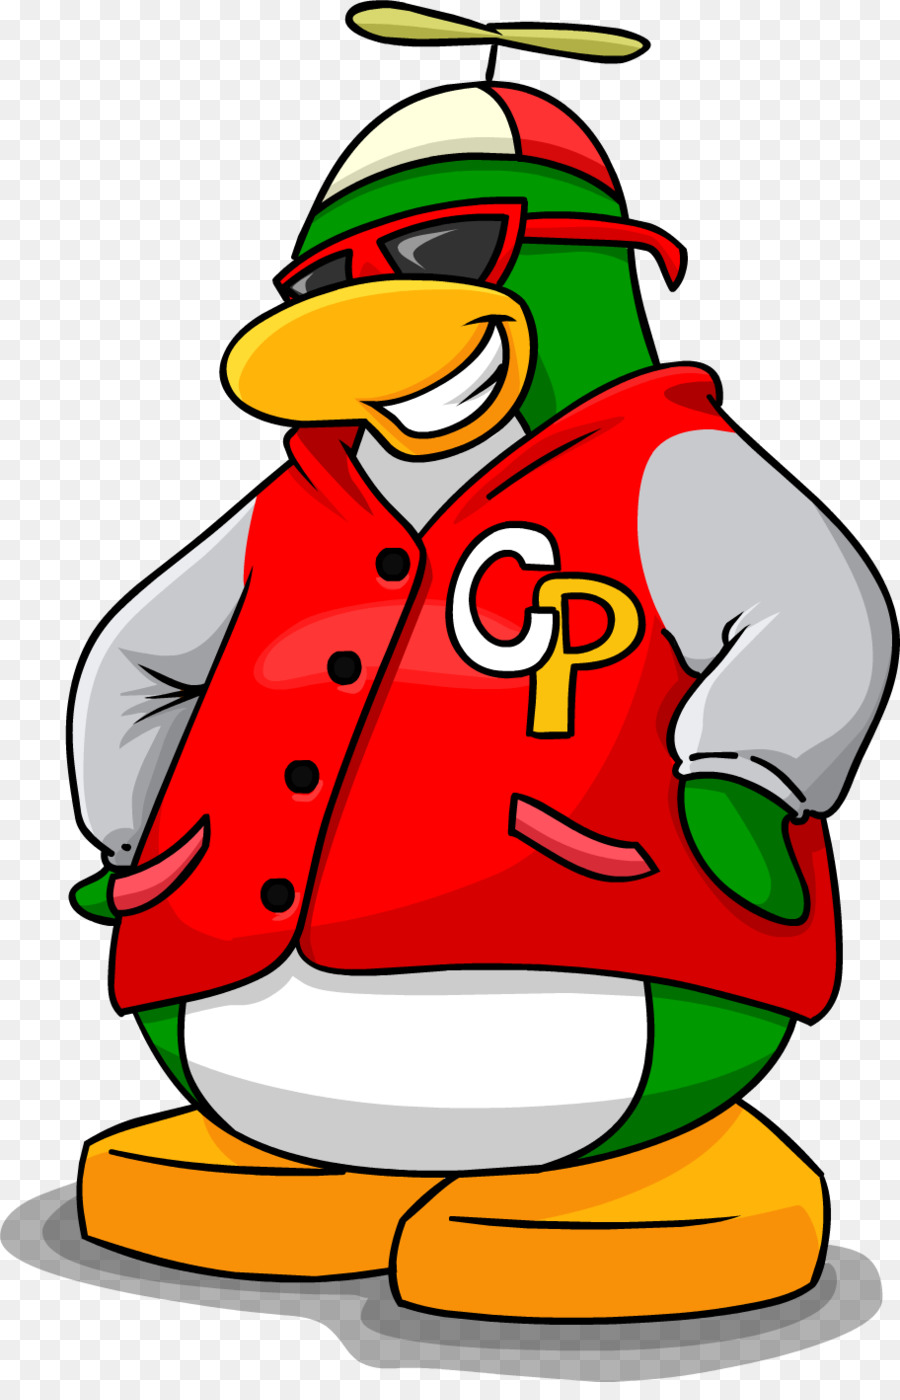 Club Penguin Toontown Online Video gioco - Pinguino